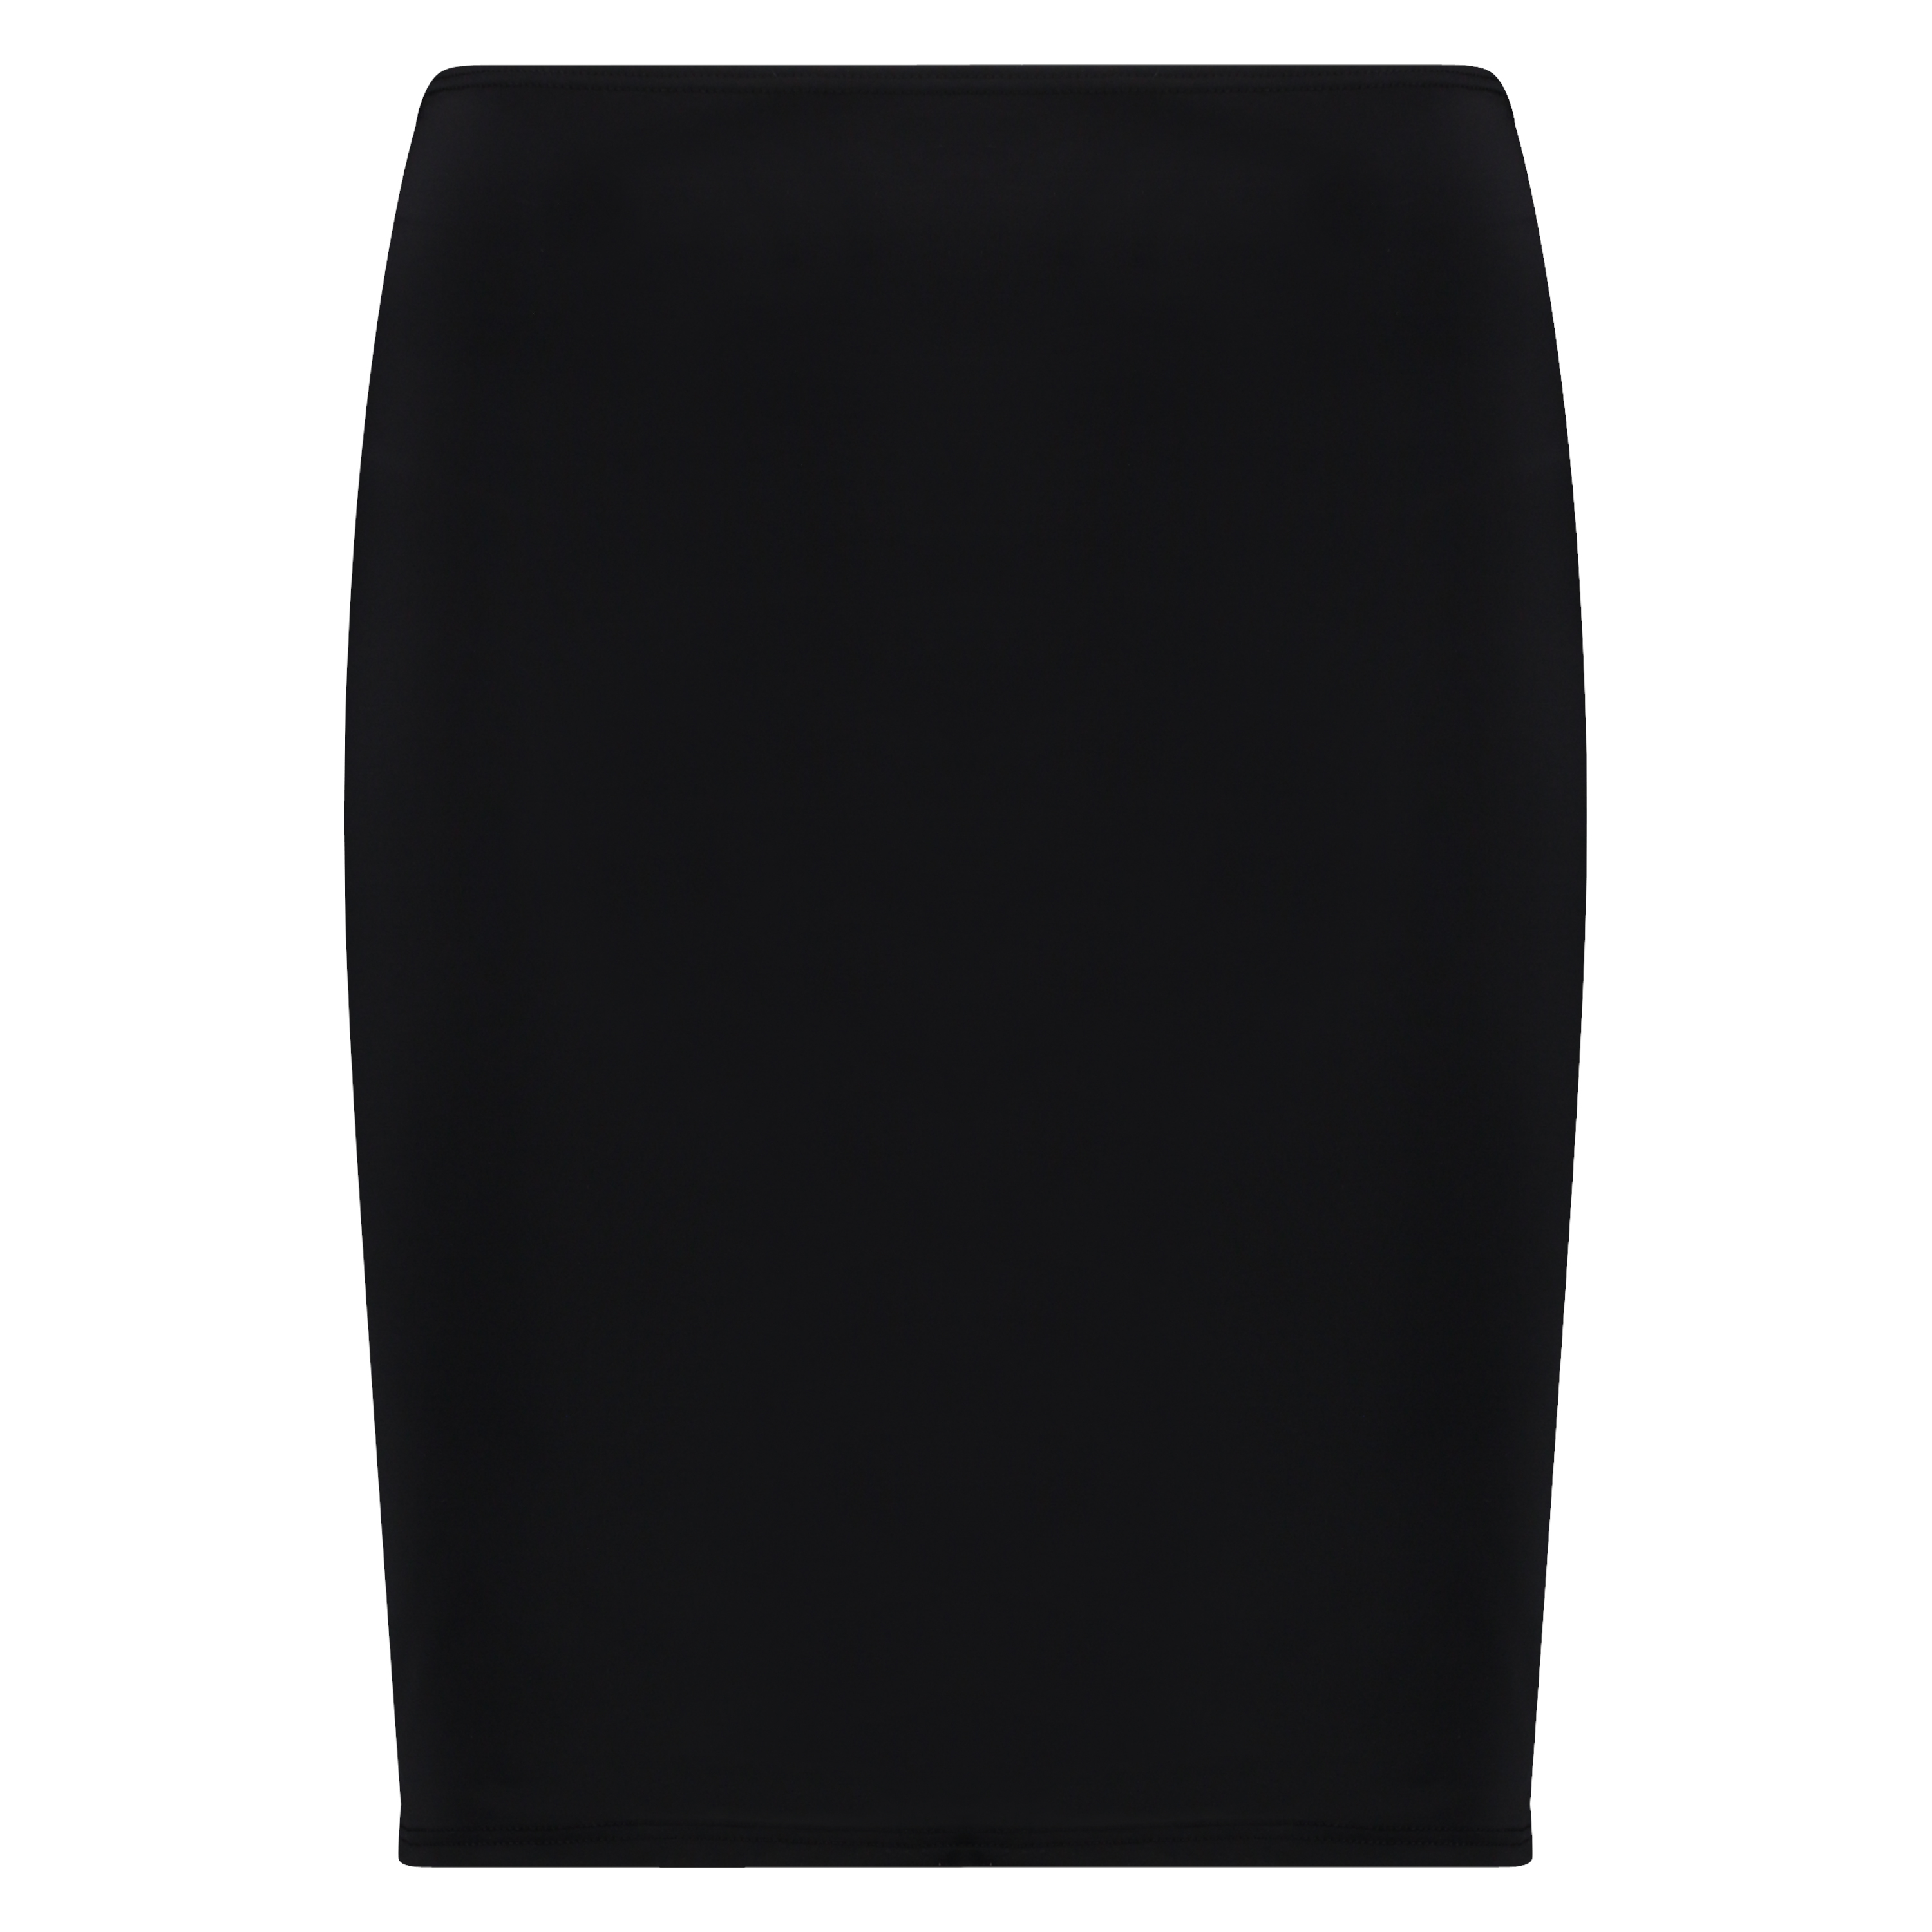 Smoothing underskirt - Level 1, Black, main